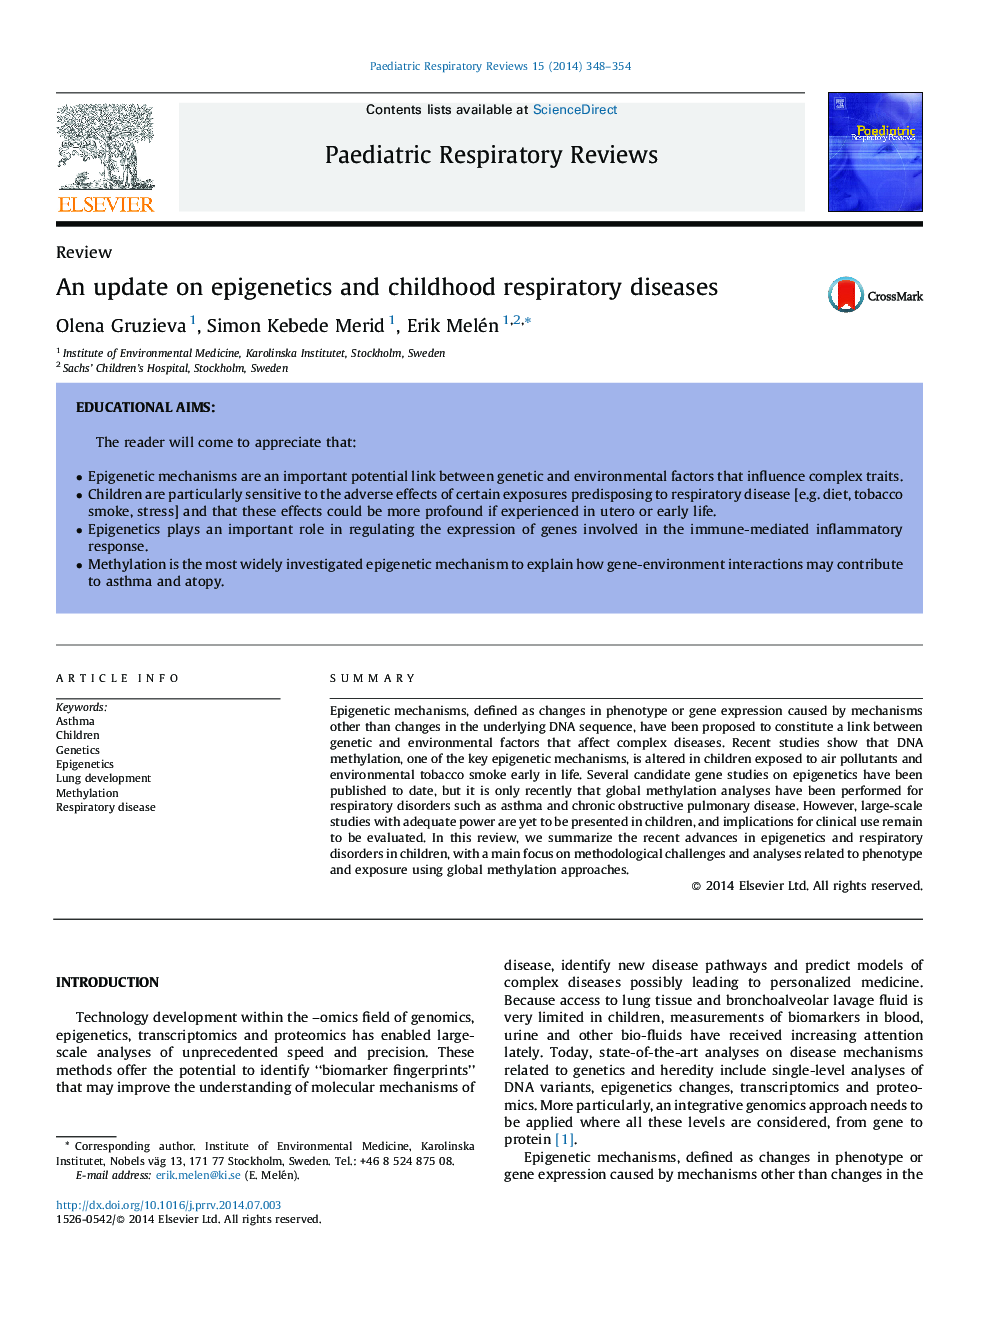 An update on epigenetics and childhood respiratory diseases